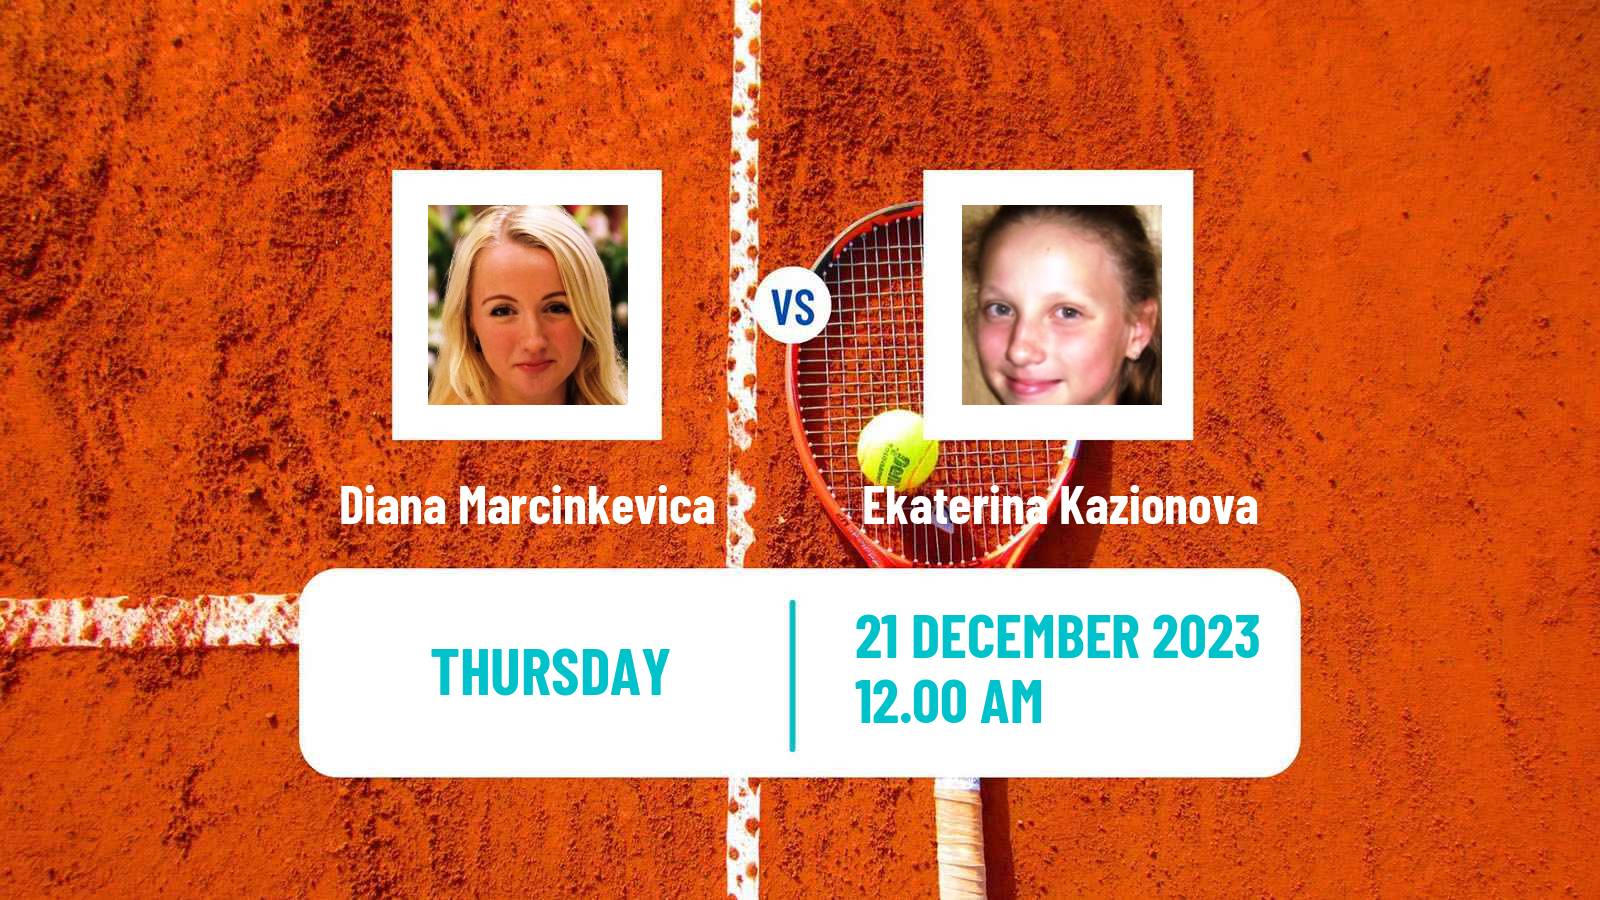 Tennis ITF W25 Solapur Women Diana Marcinkevica - Ekaterina Kazionova